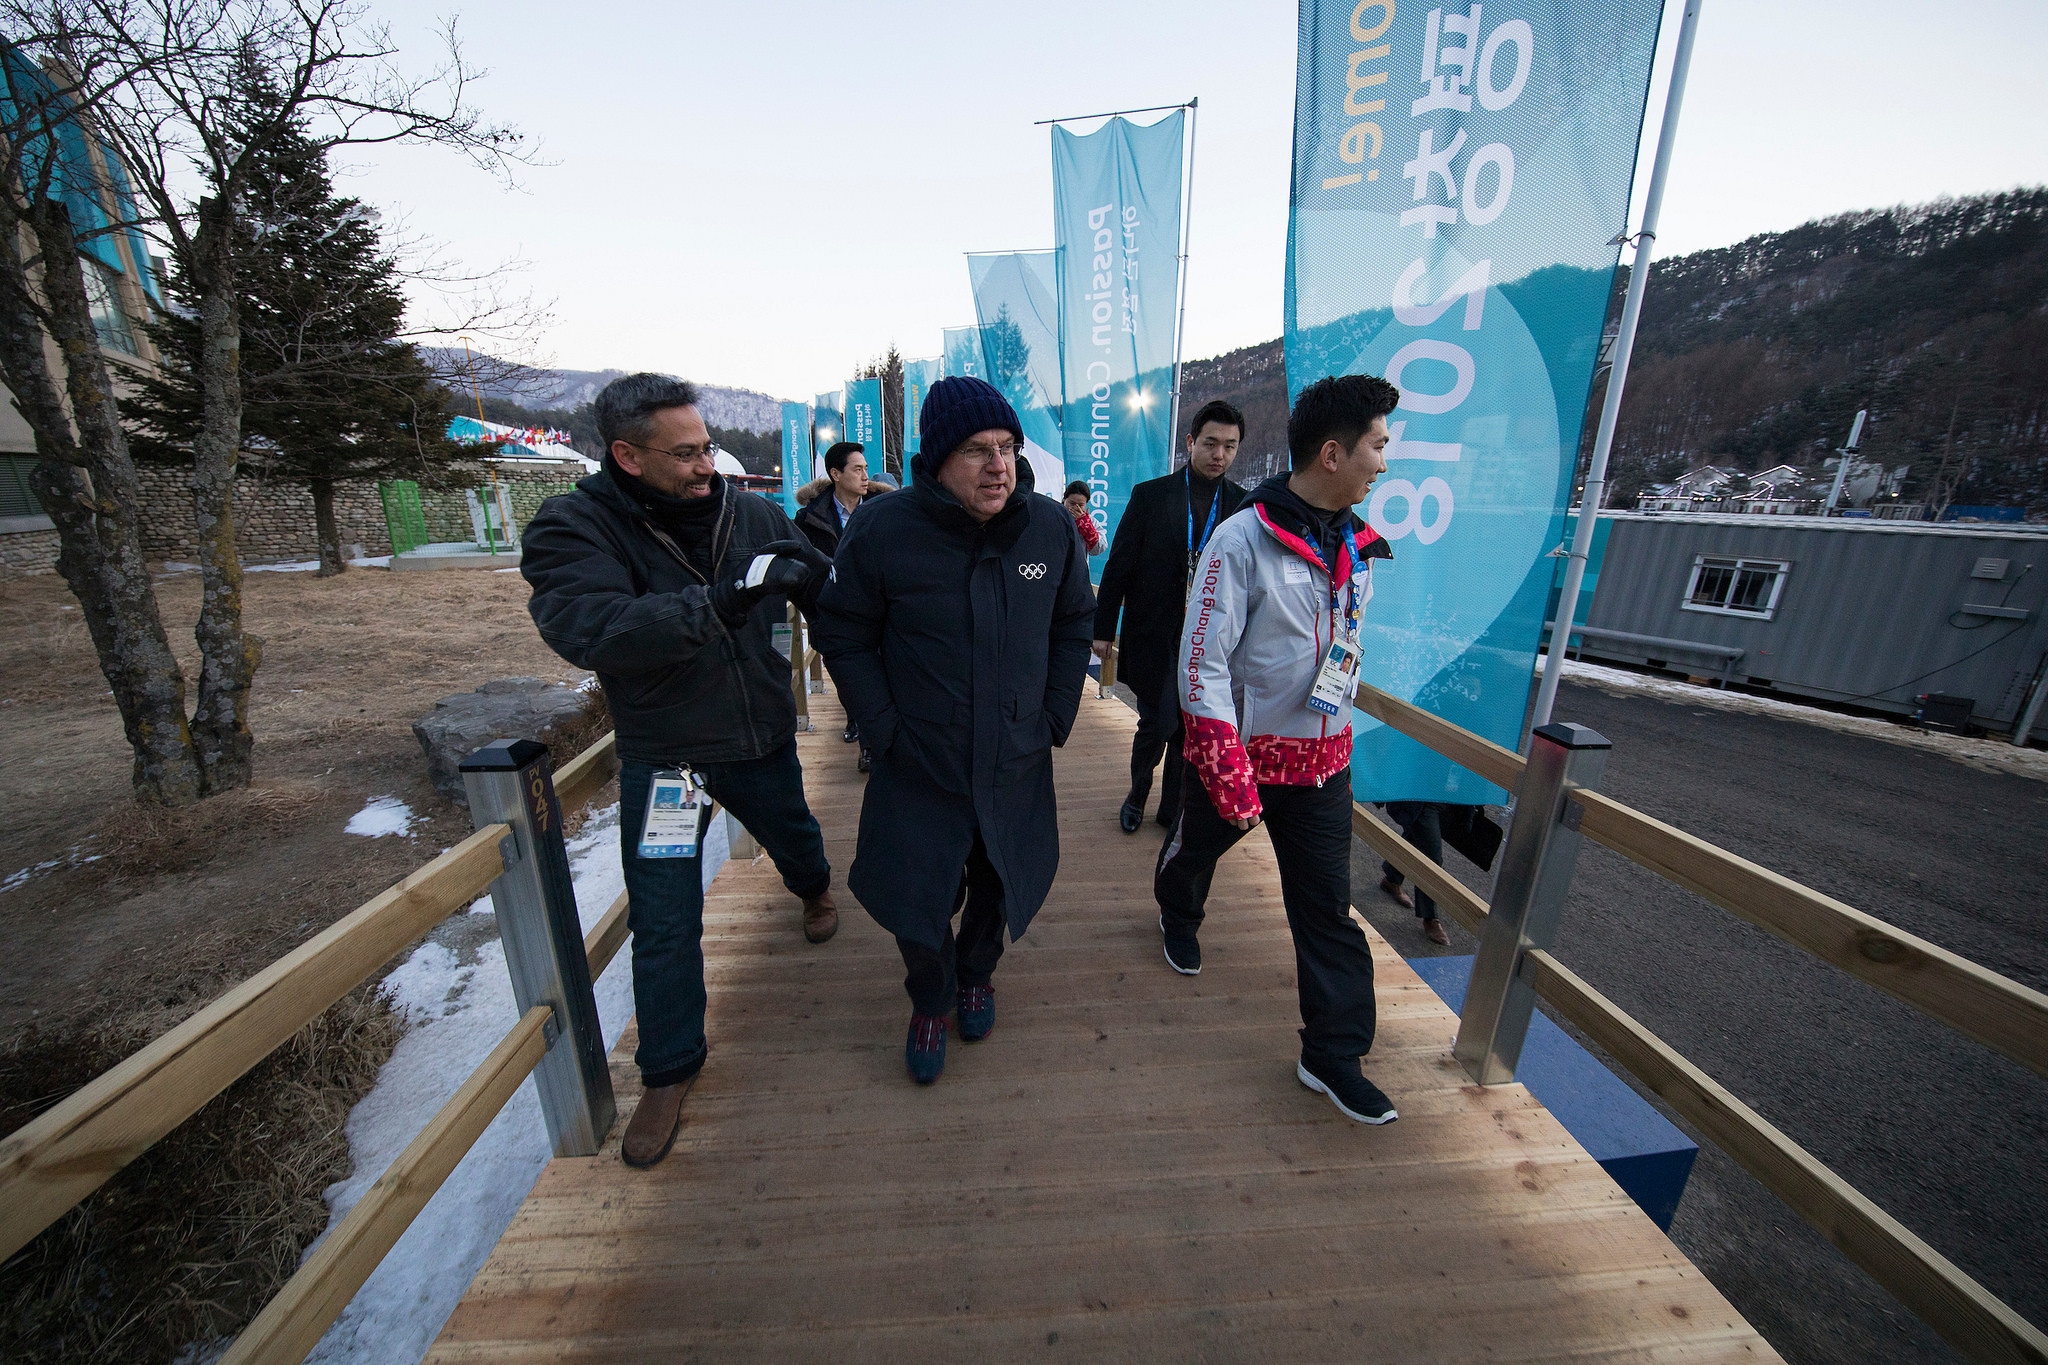 IOC President Thomas Bach wraps up warm to visit the Athletes' Village ©IOC/Flickr